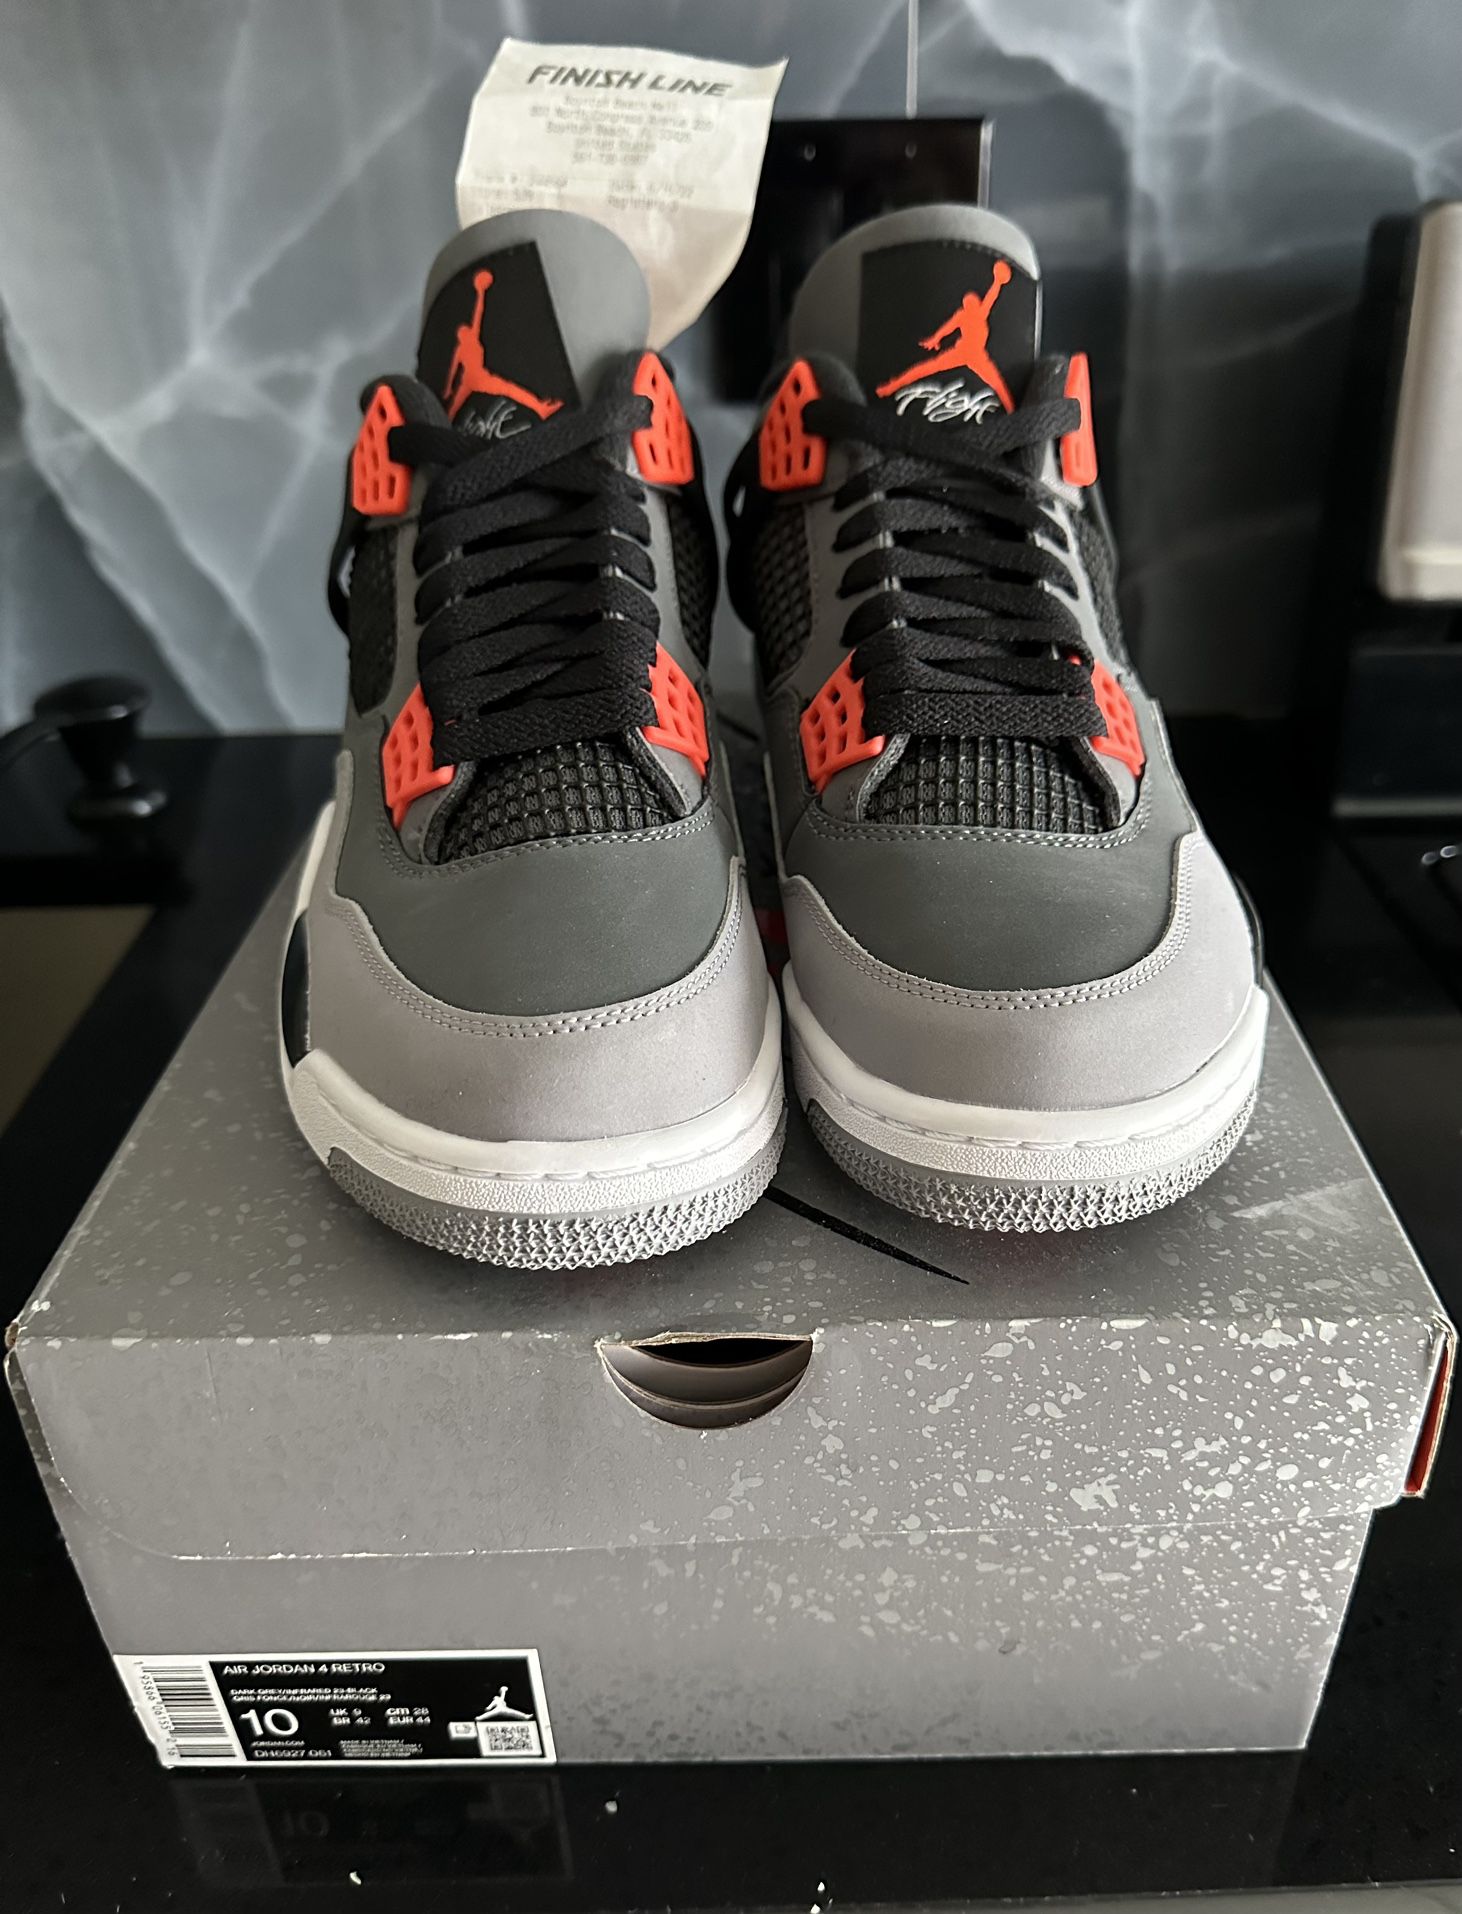 Jordan 4 Infrared Size 10